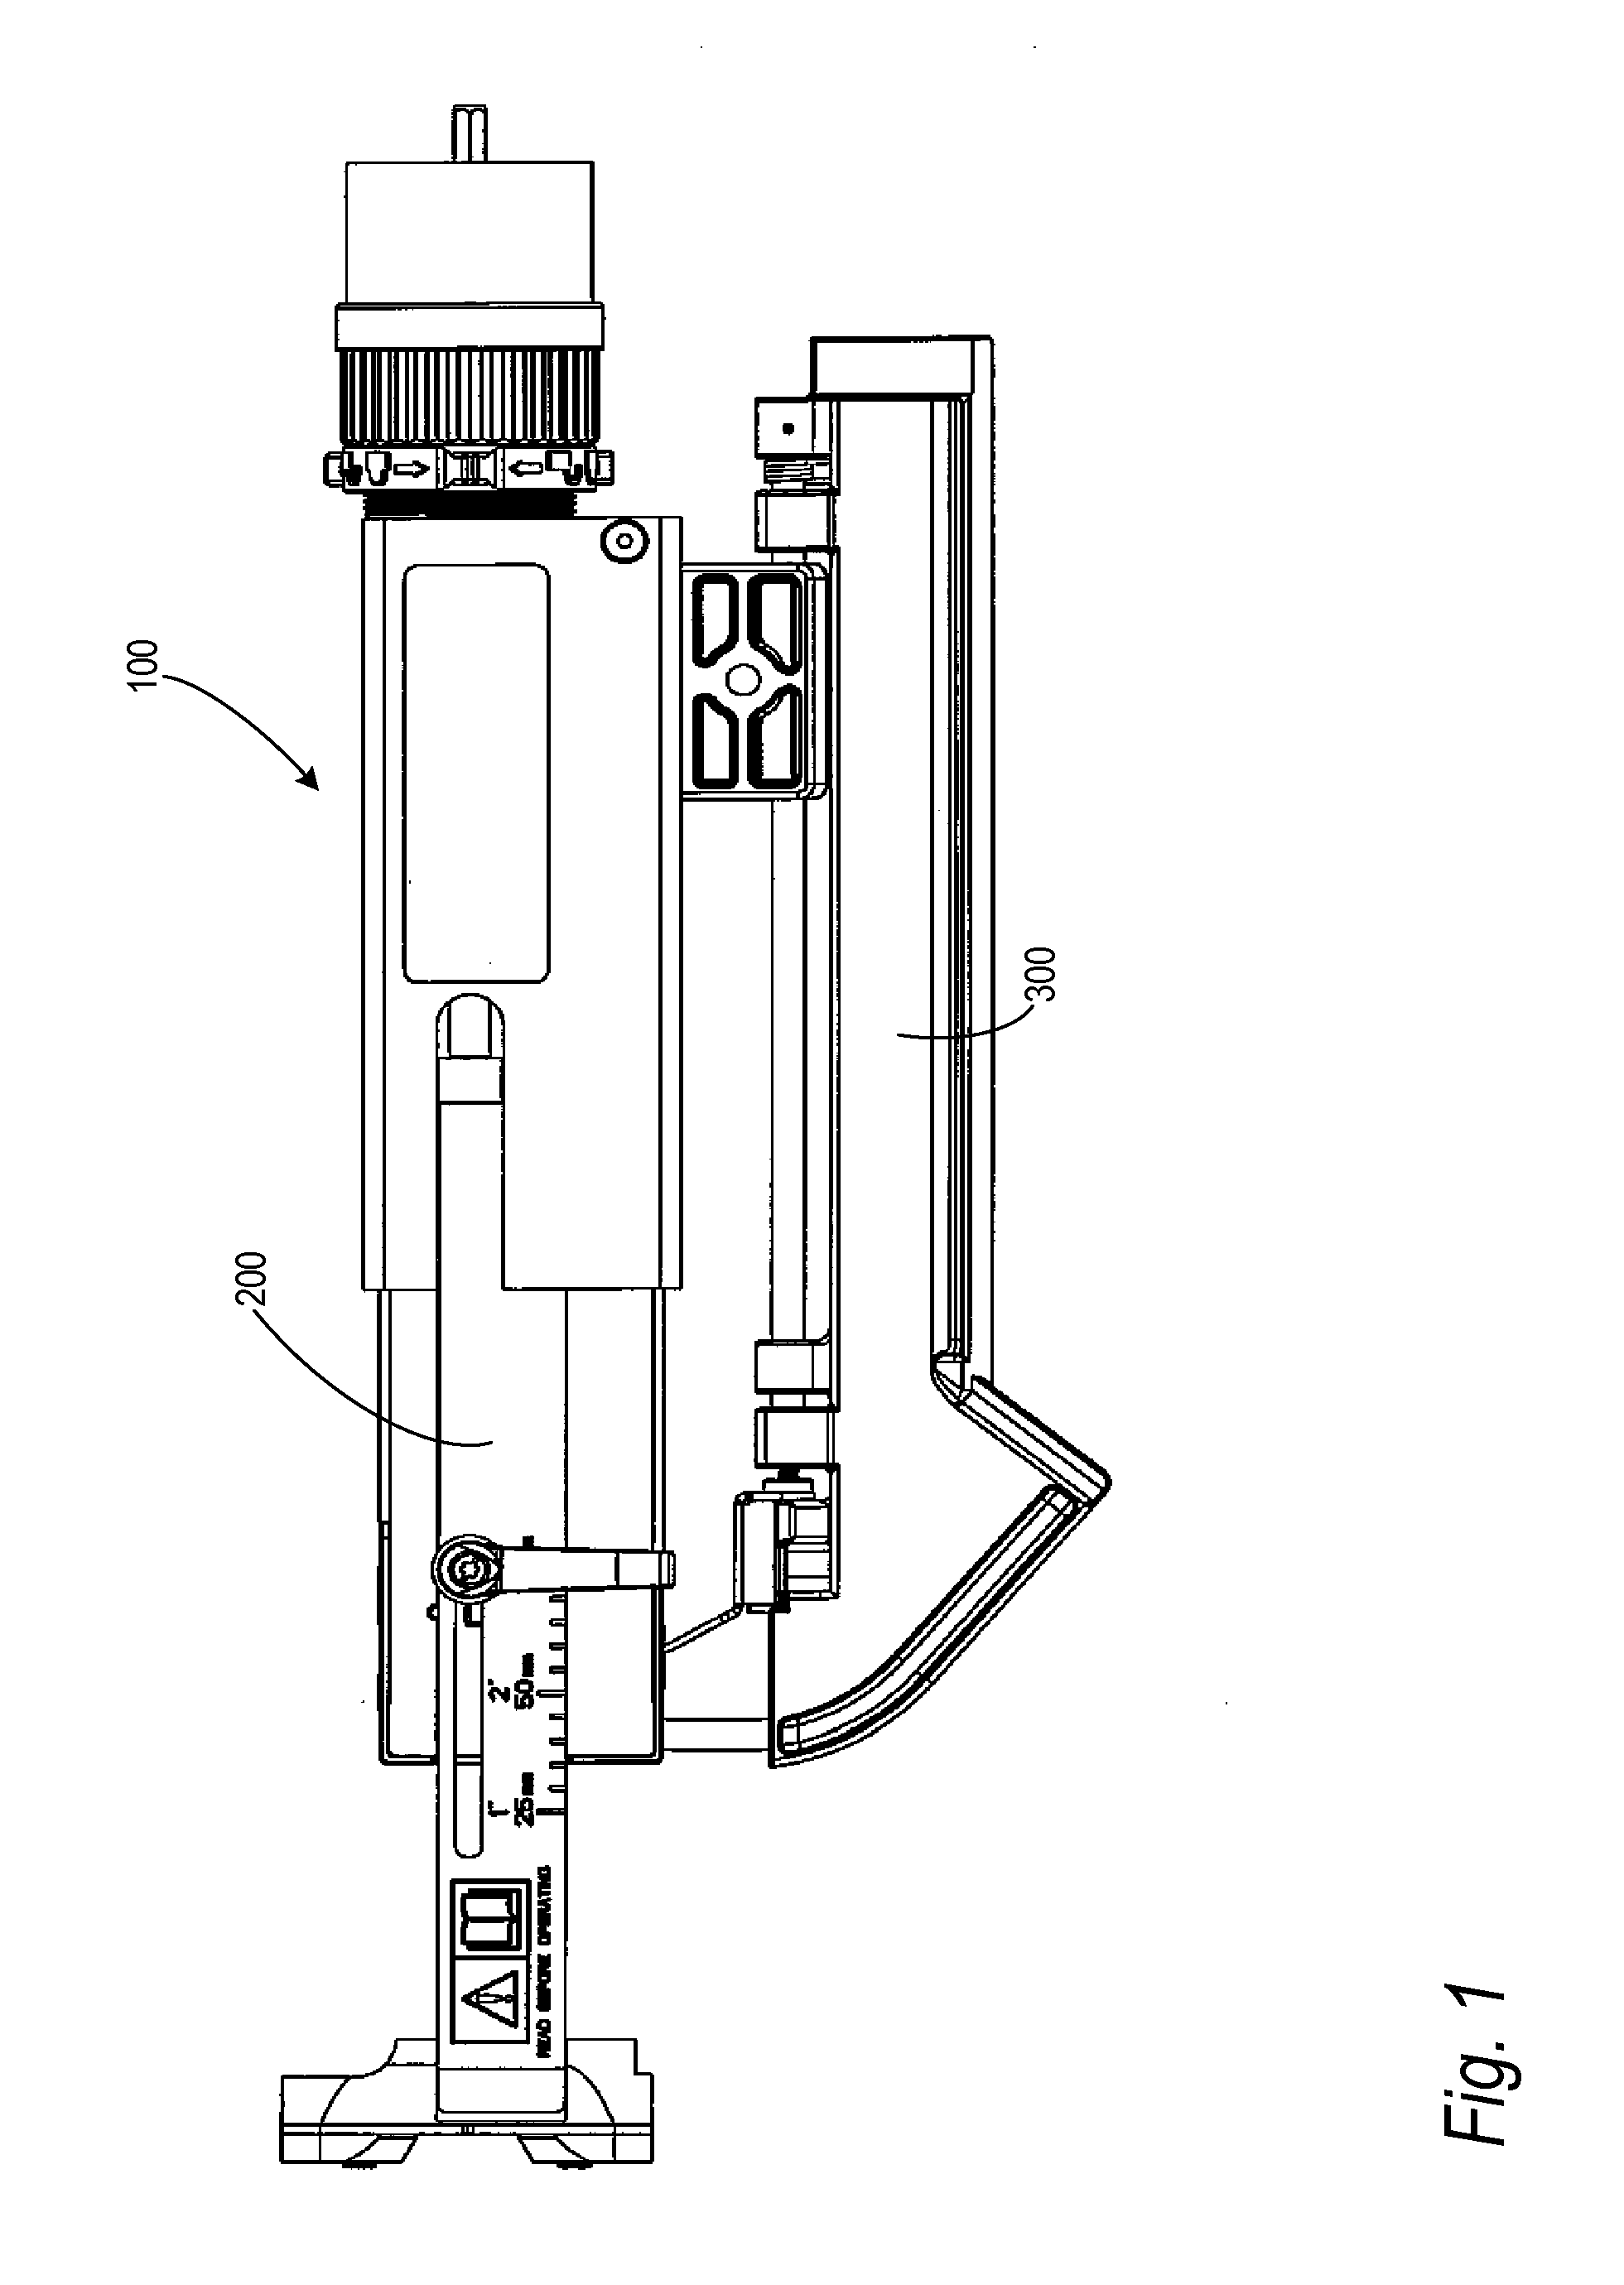 Screwstrip advance mechanism and feeder for a power screwdriver